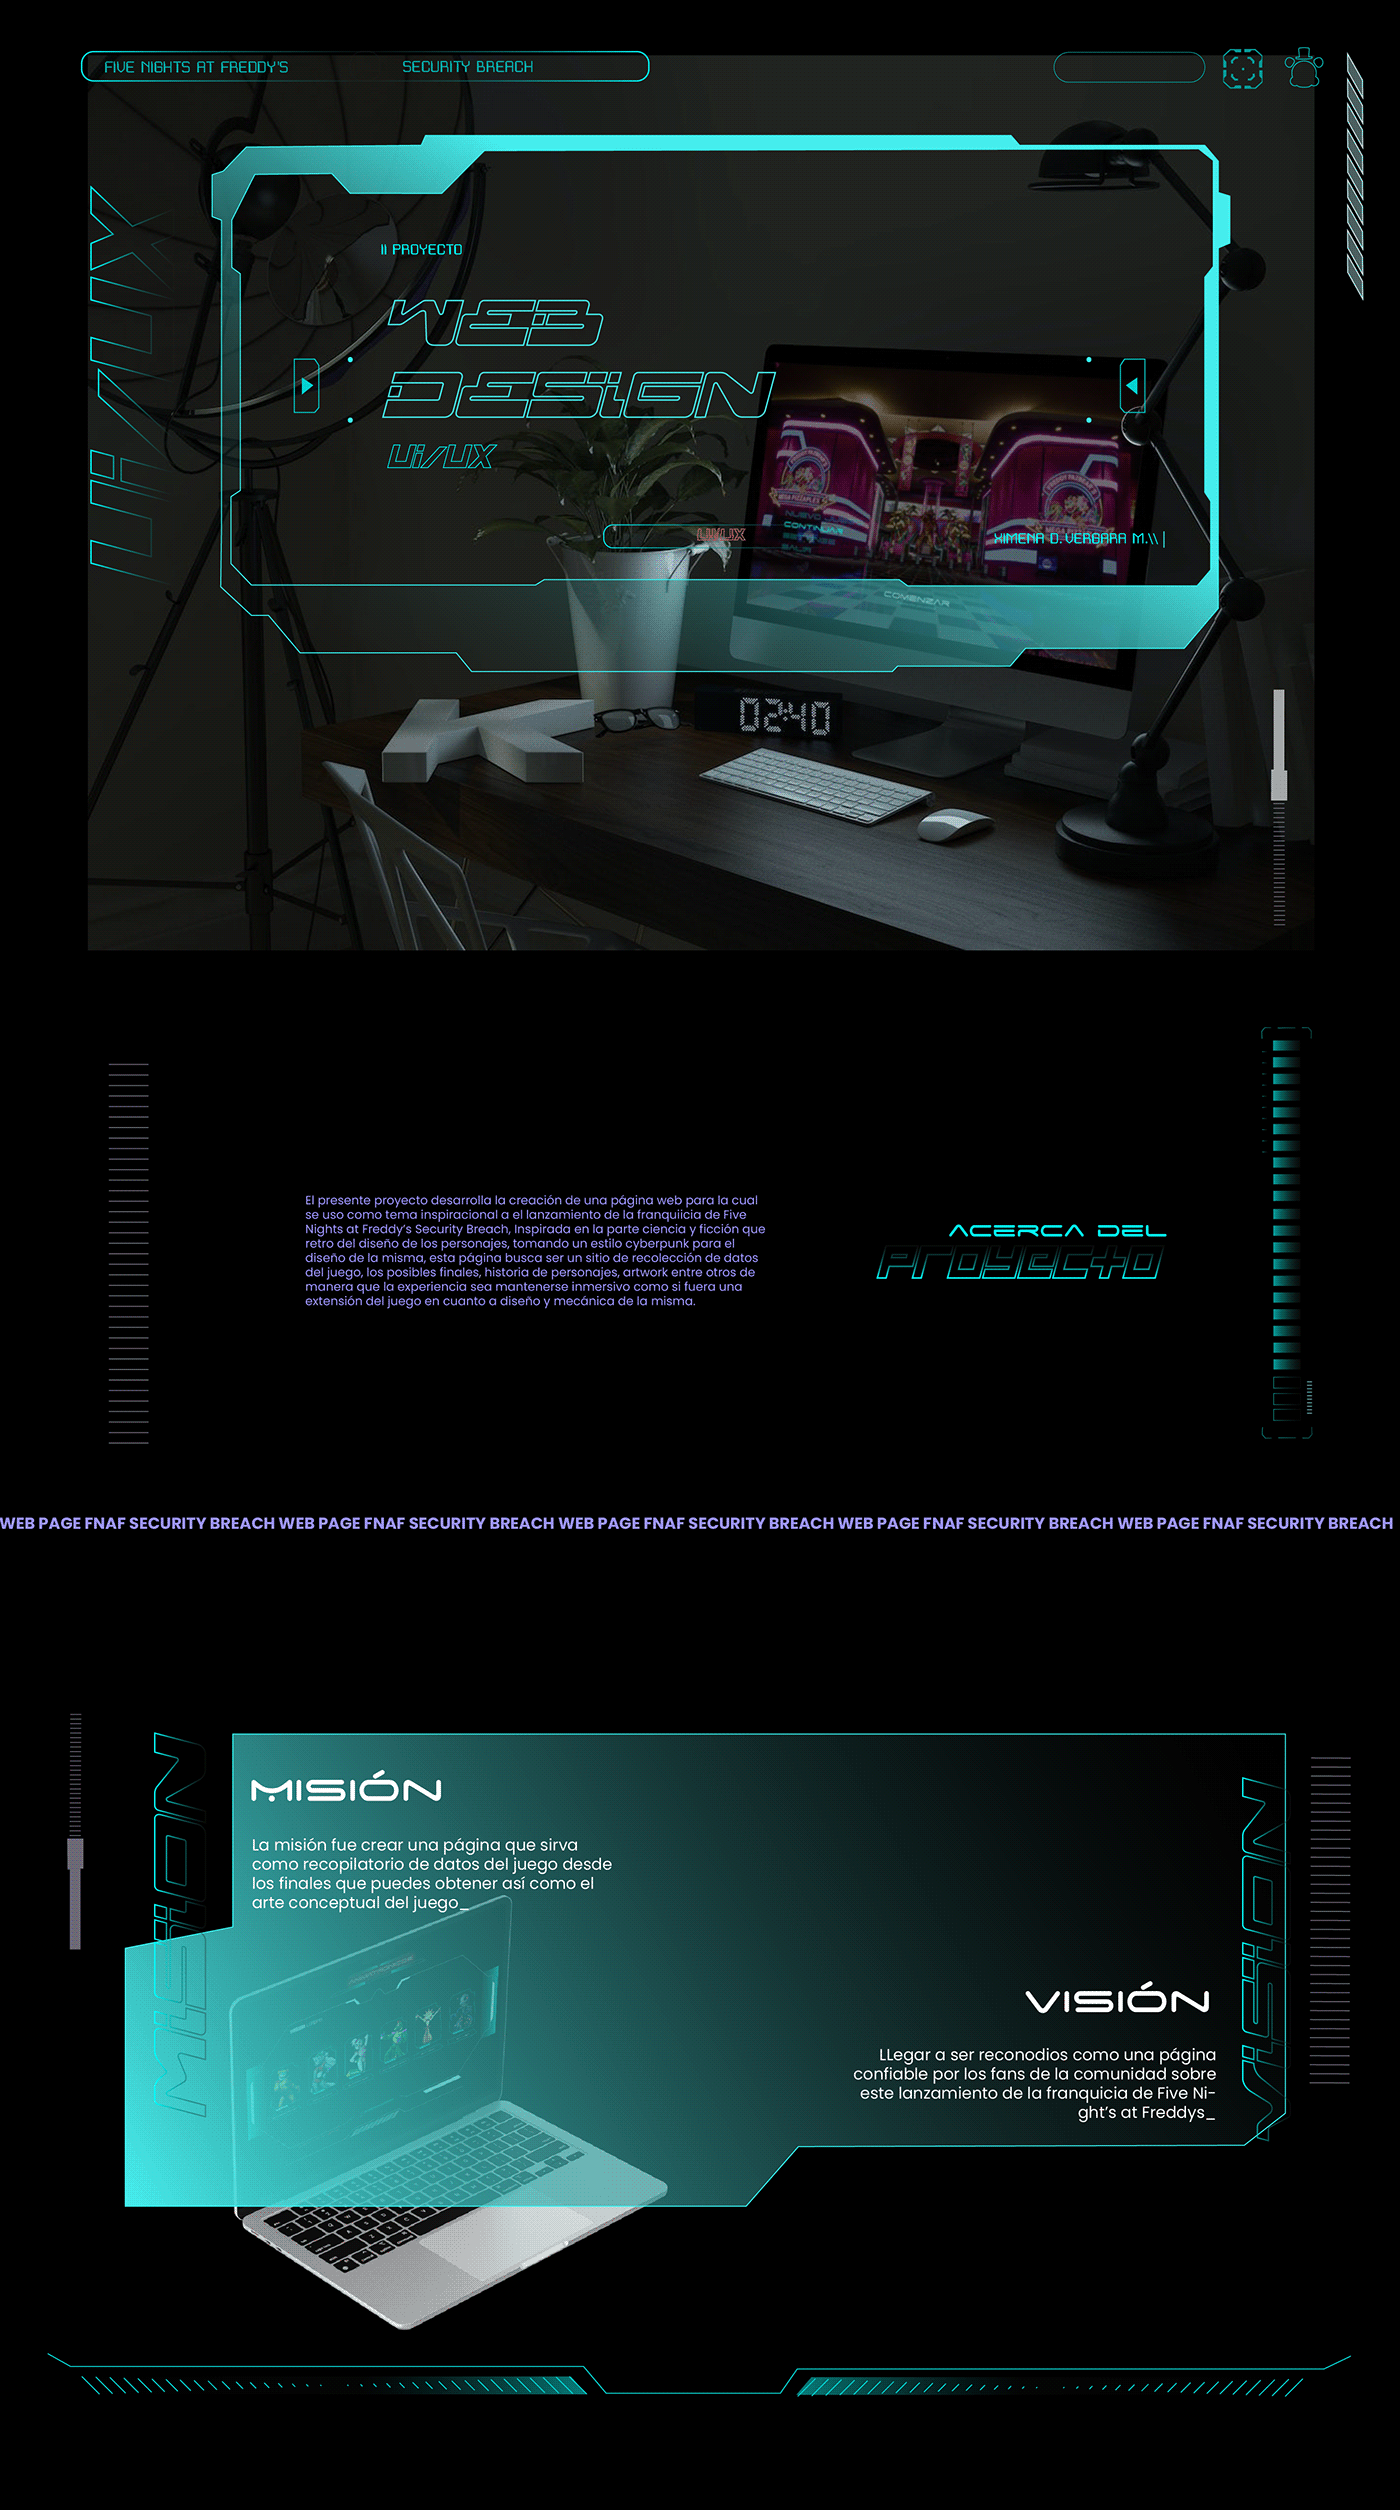 Image may contain: computer and computer monitor